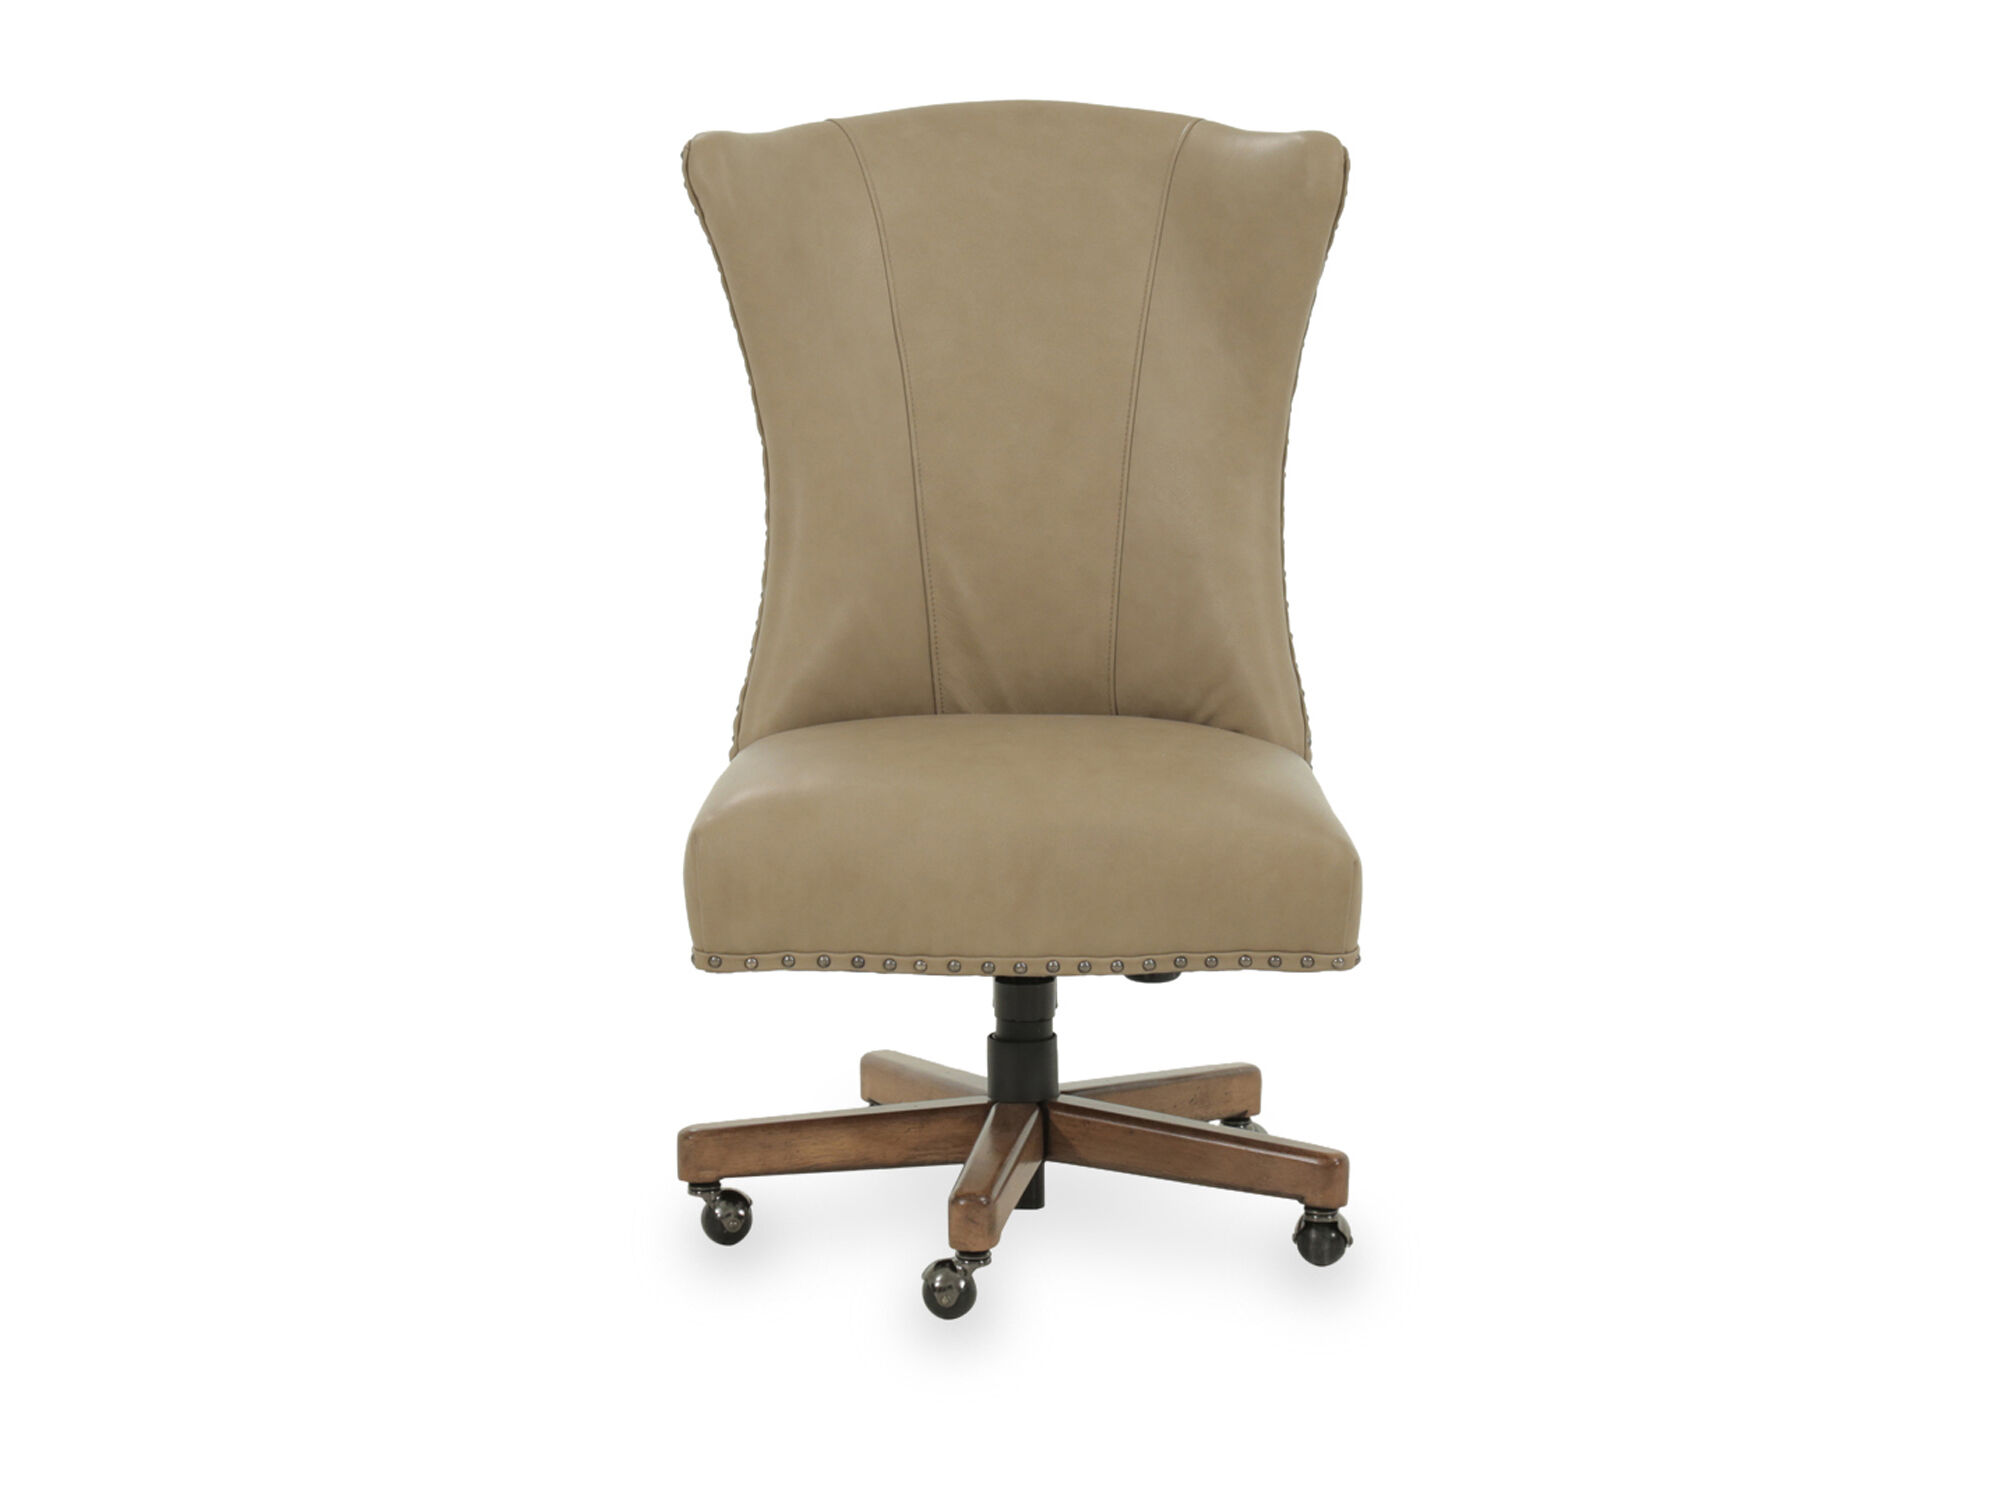 Leather NailheadTrimmed Swivel Desk Chair in Beige